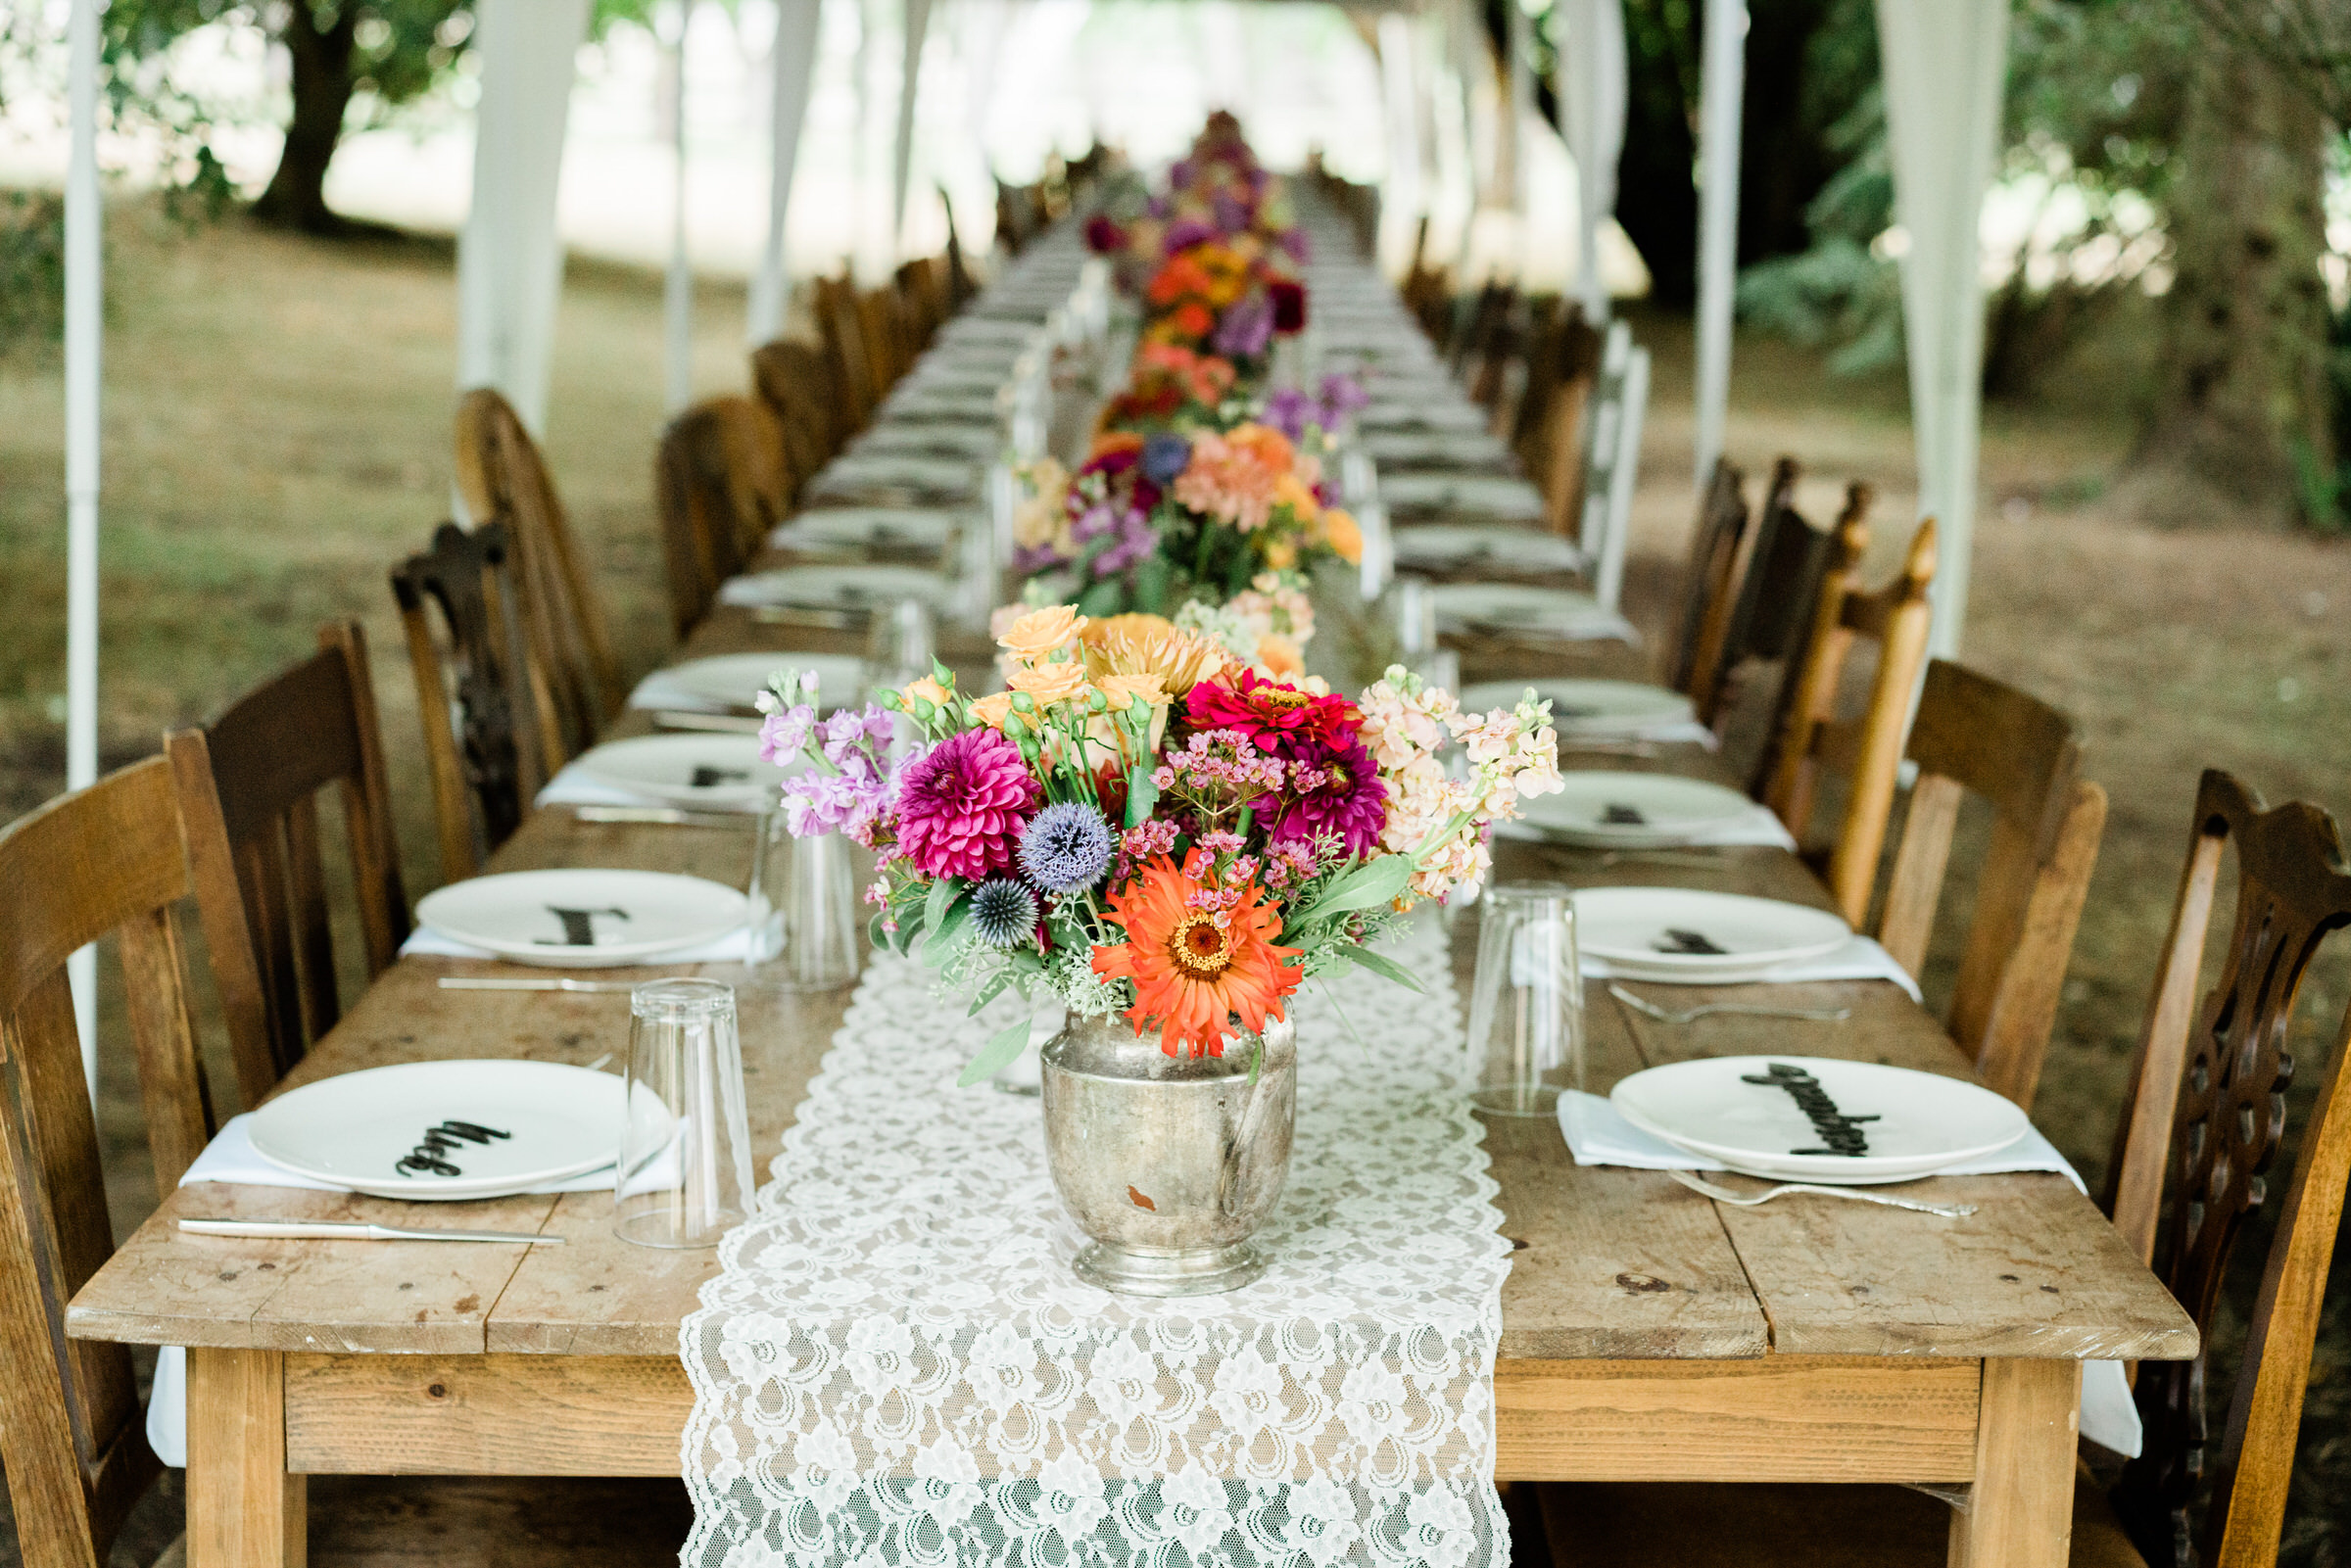 Wayfarer Whidbey Island Wedding: Tablescape outdoor wedding reception summer